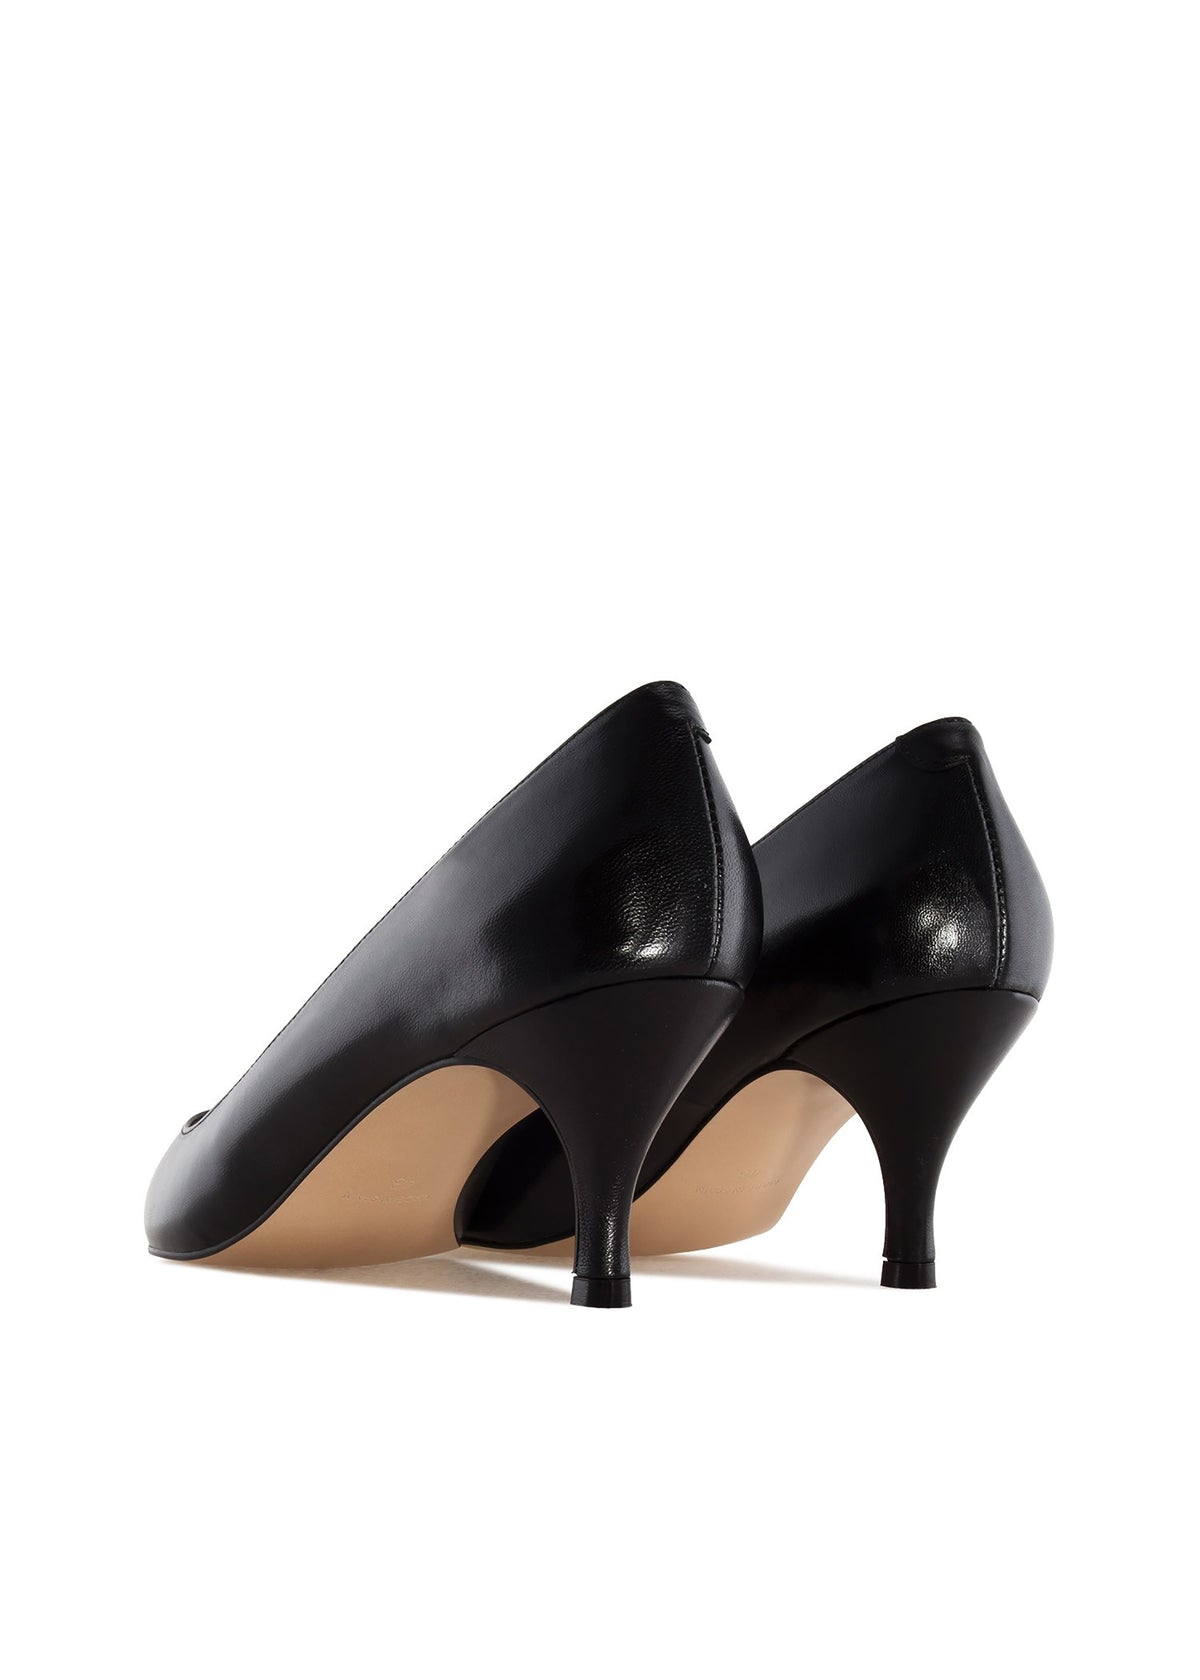 Stiletto heels - Amanda, black leather